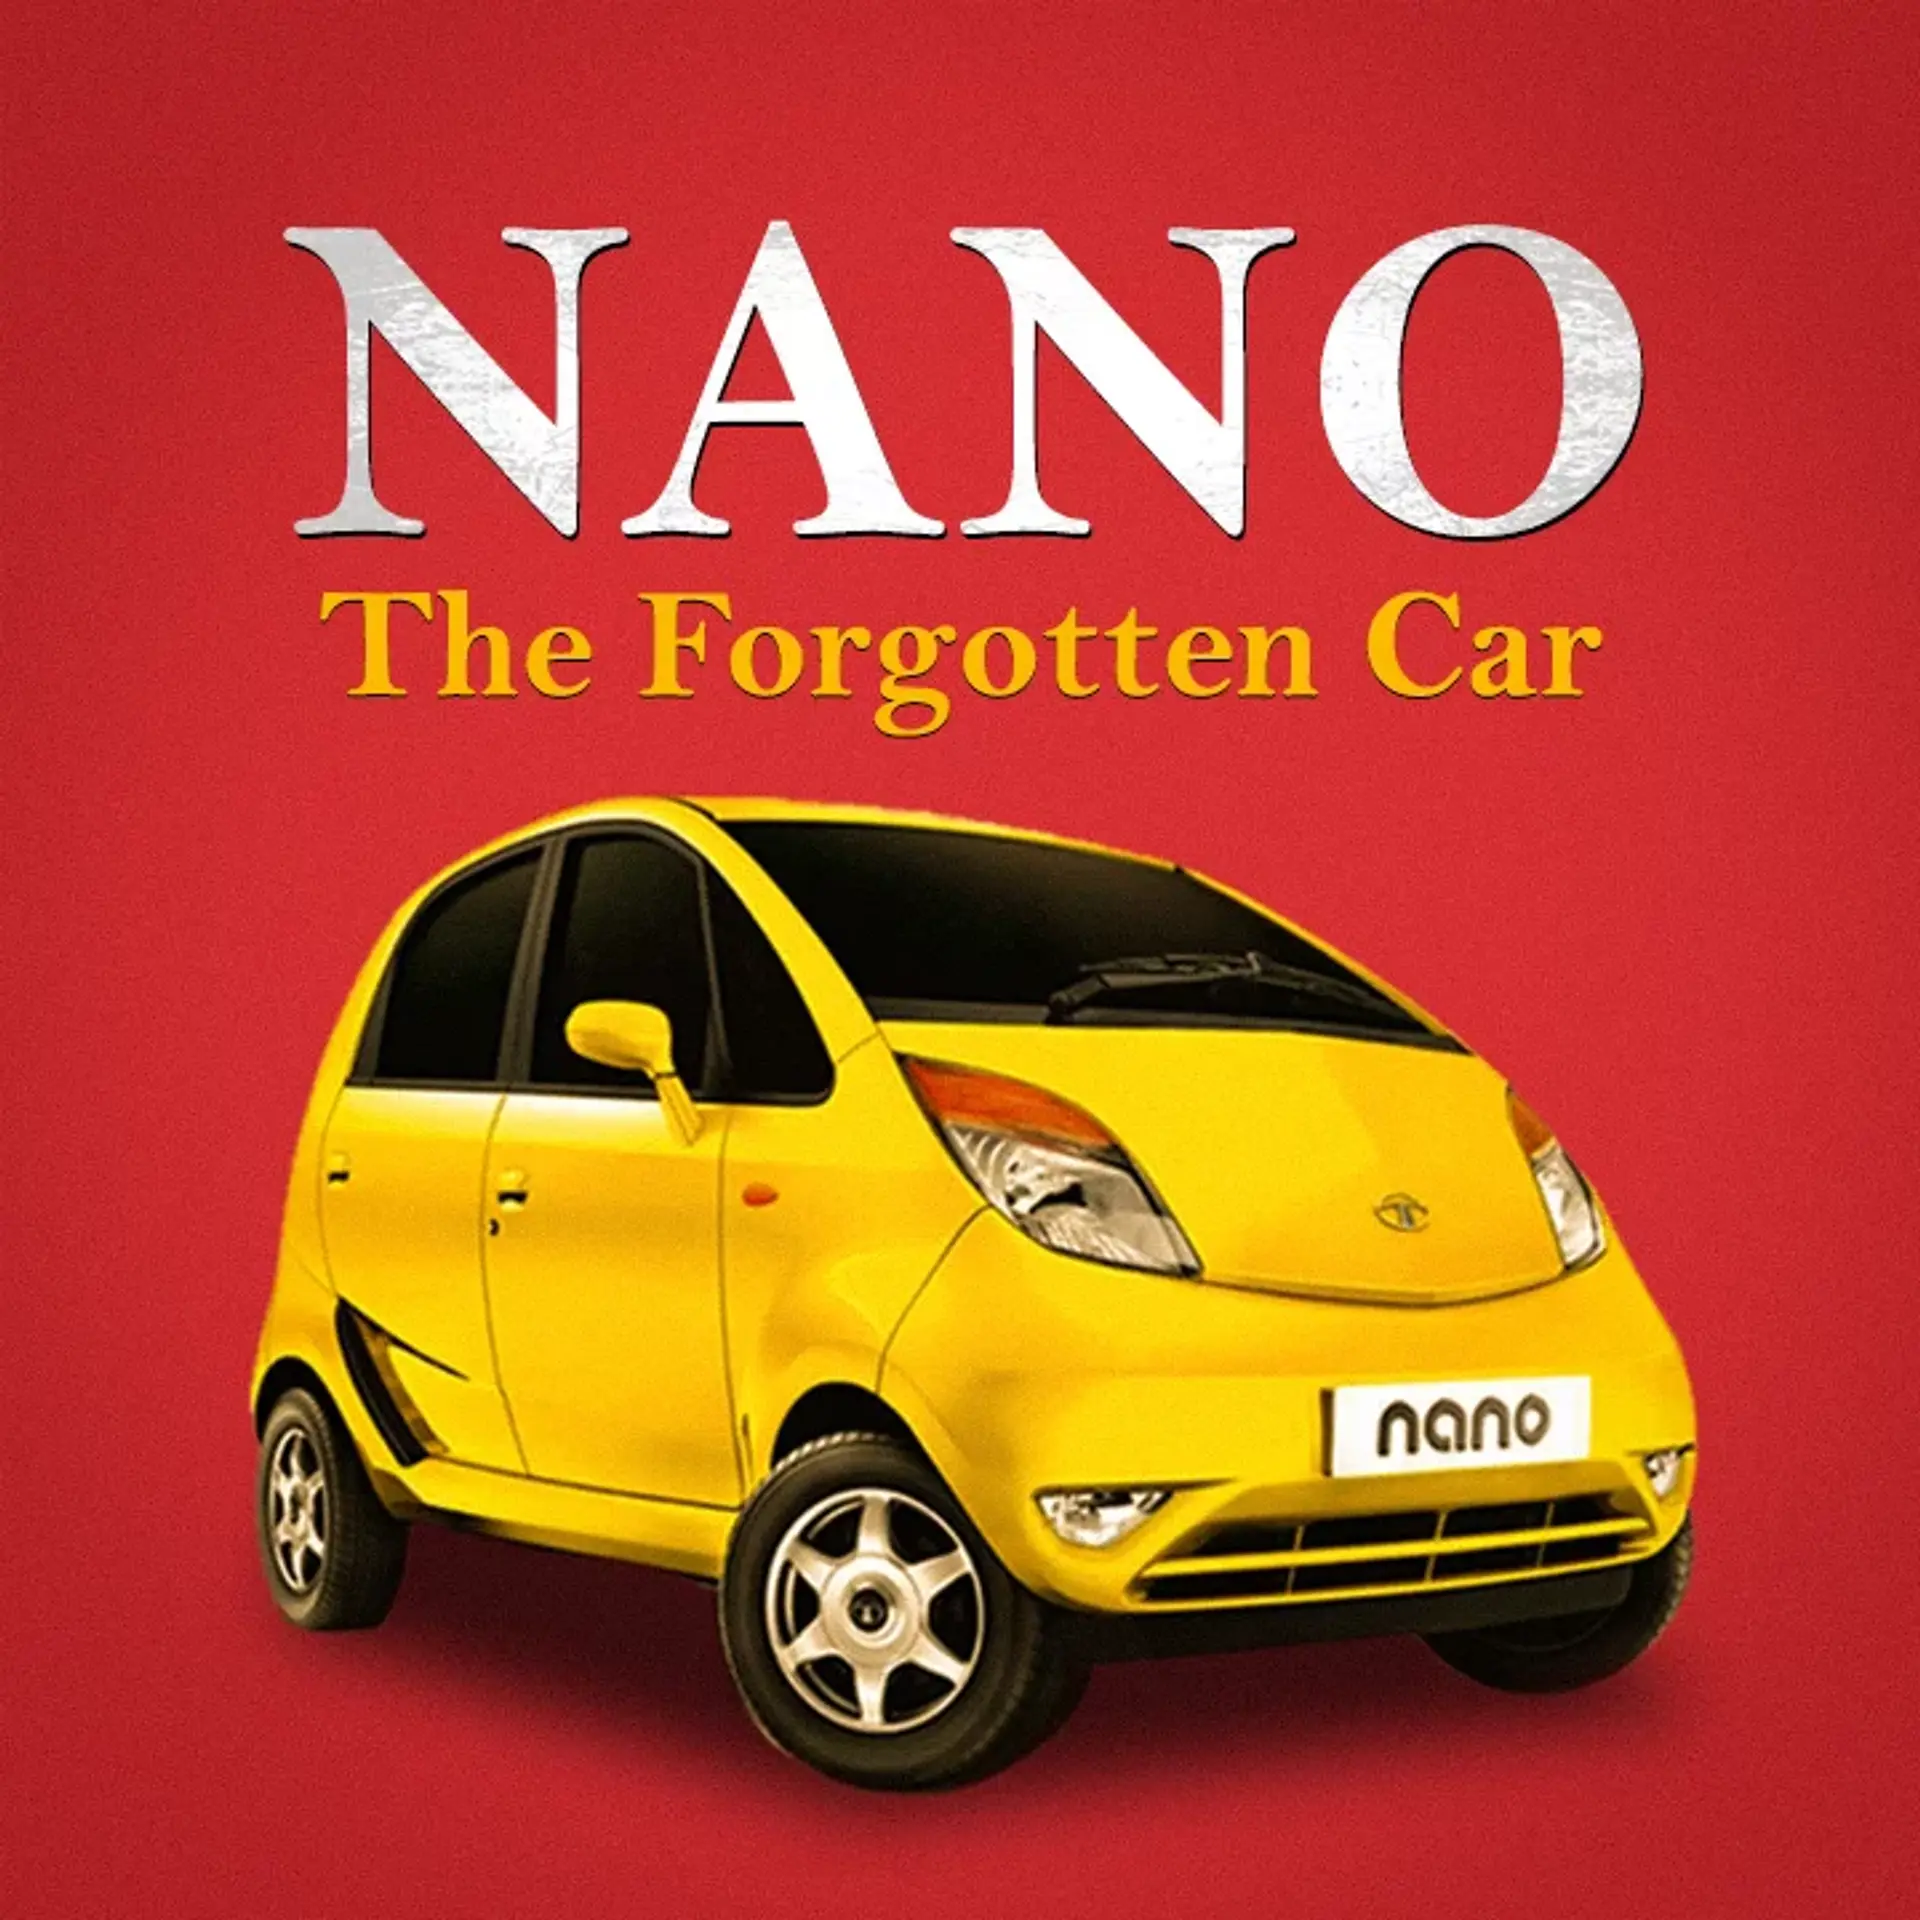 03. Nano - Engineering Masterpiece